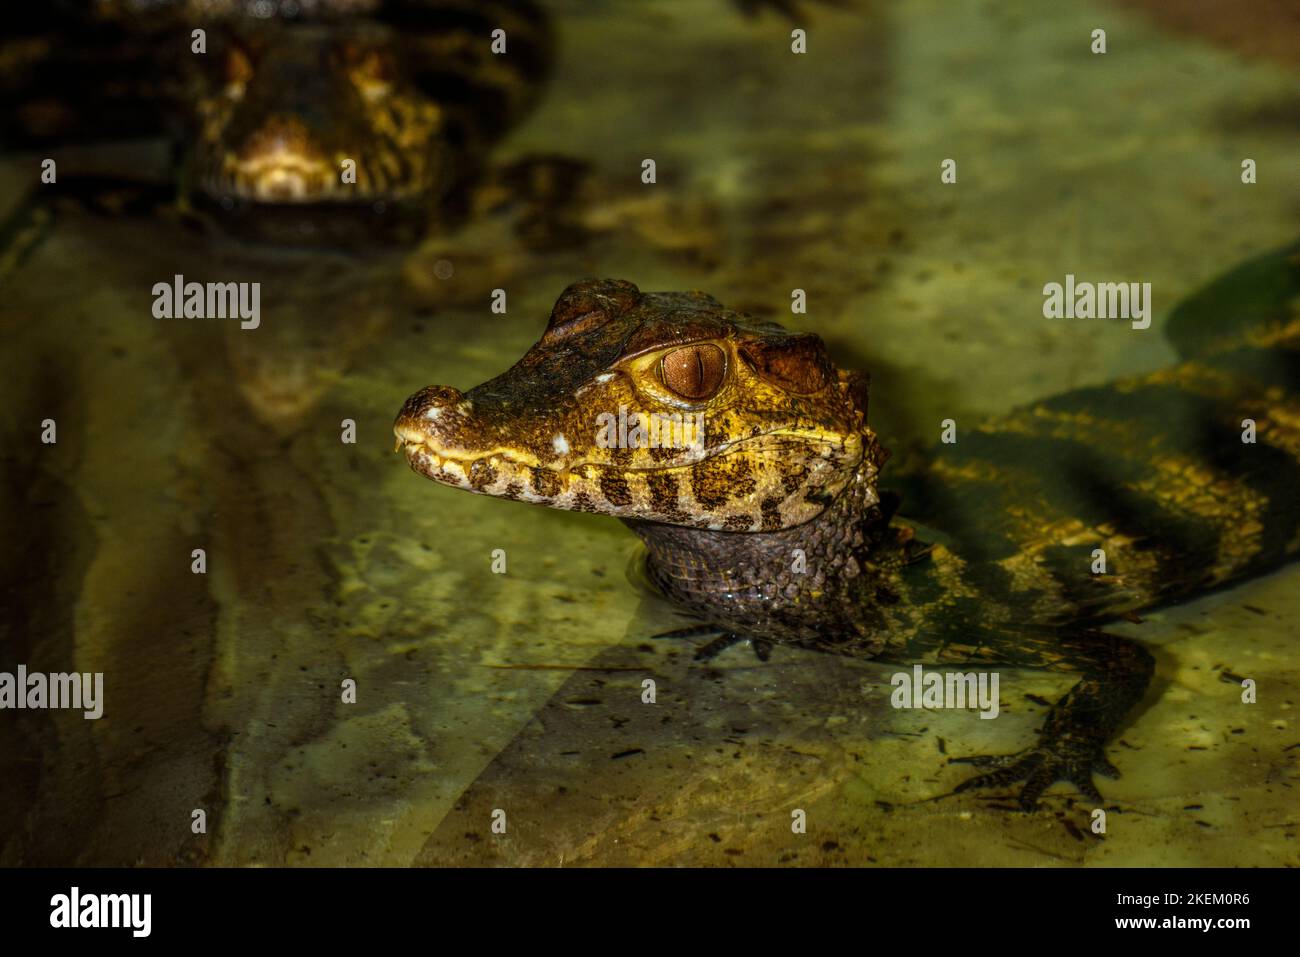 Brillenkaiman (Caiman crocodilus) in Gefangenschaft. In Mittel- und Südamerika beheimatet, Reptilia Reptile Zoo, Vaughan, Ontario, Kanada Stockfoto